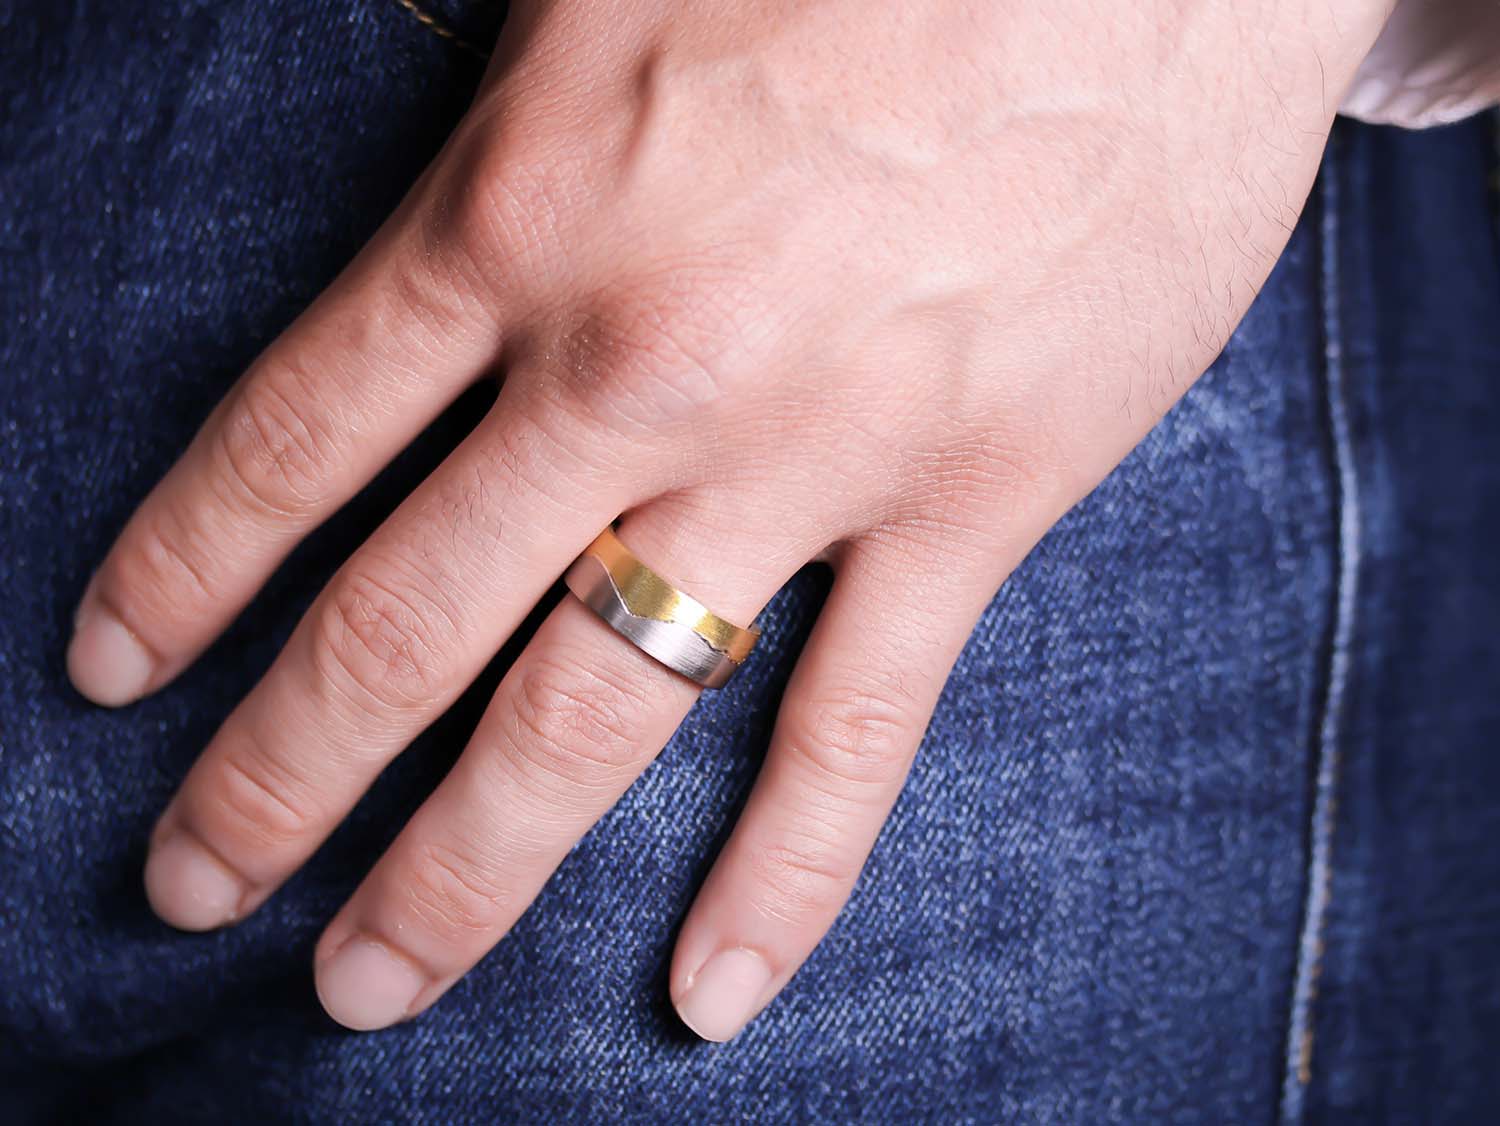 Diamond Rings Palladium Rings 2mm Palladium Diamond Eternity Wedding Rings  at Elma Jewellery Mobile Site